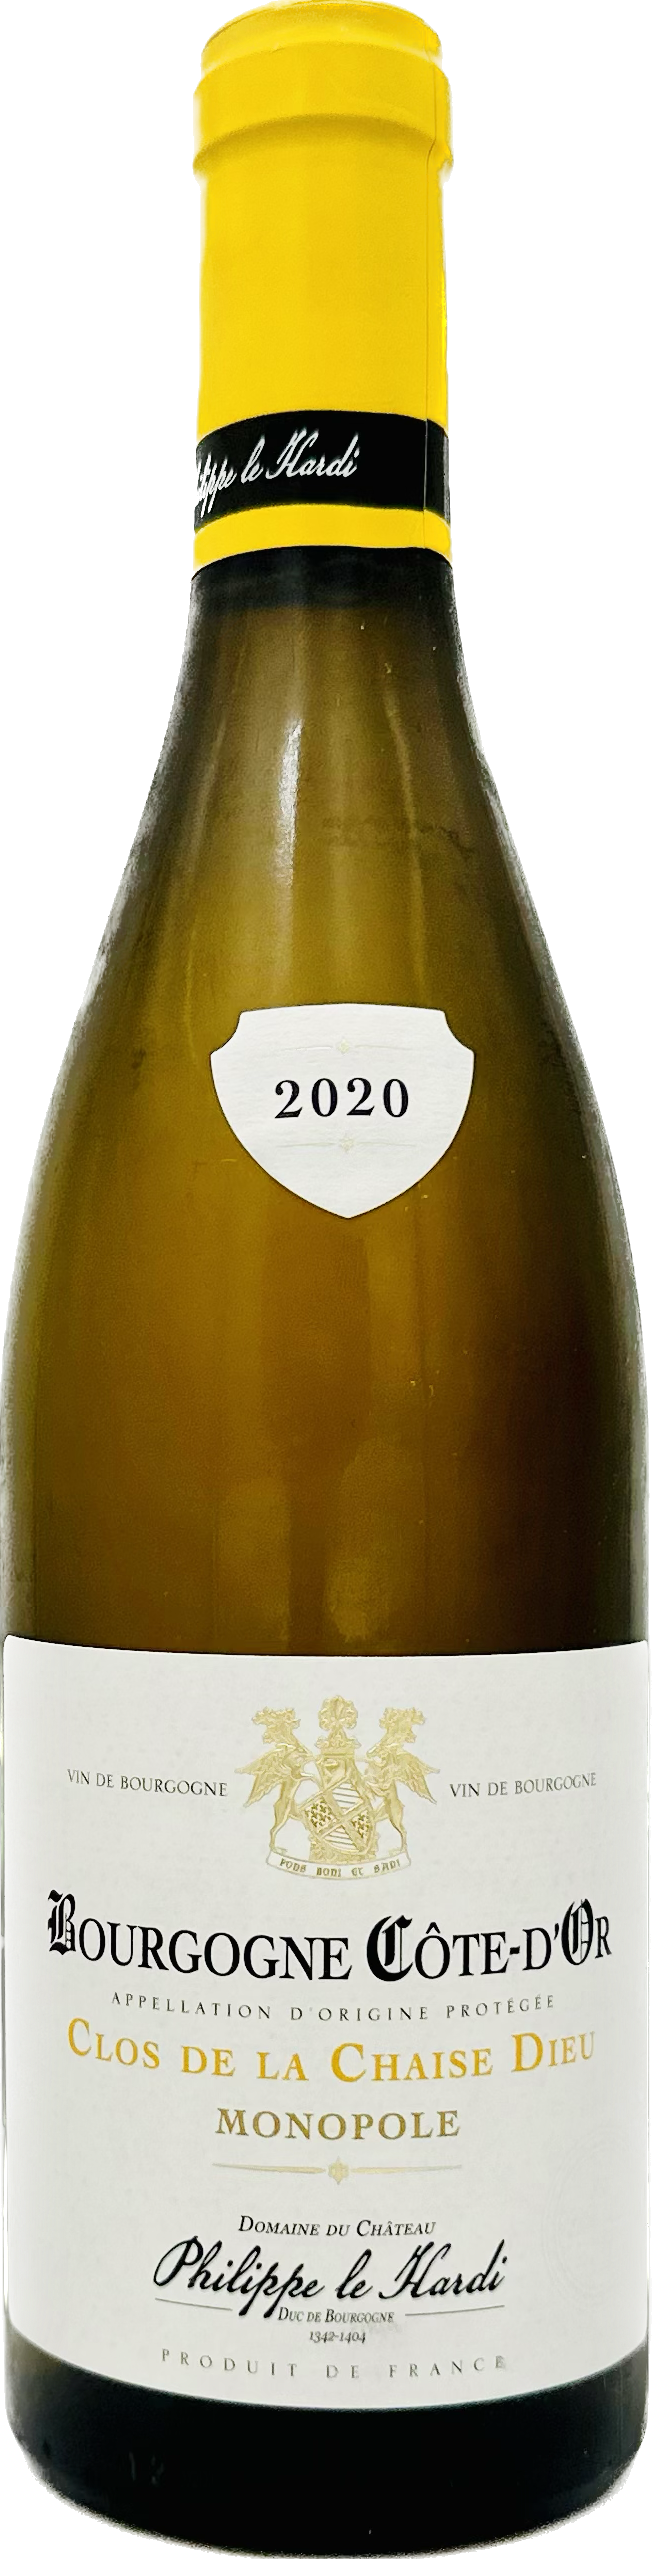 Philippe le Hardi Bourgogne Cote d'Or 2020